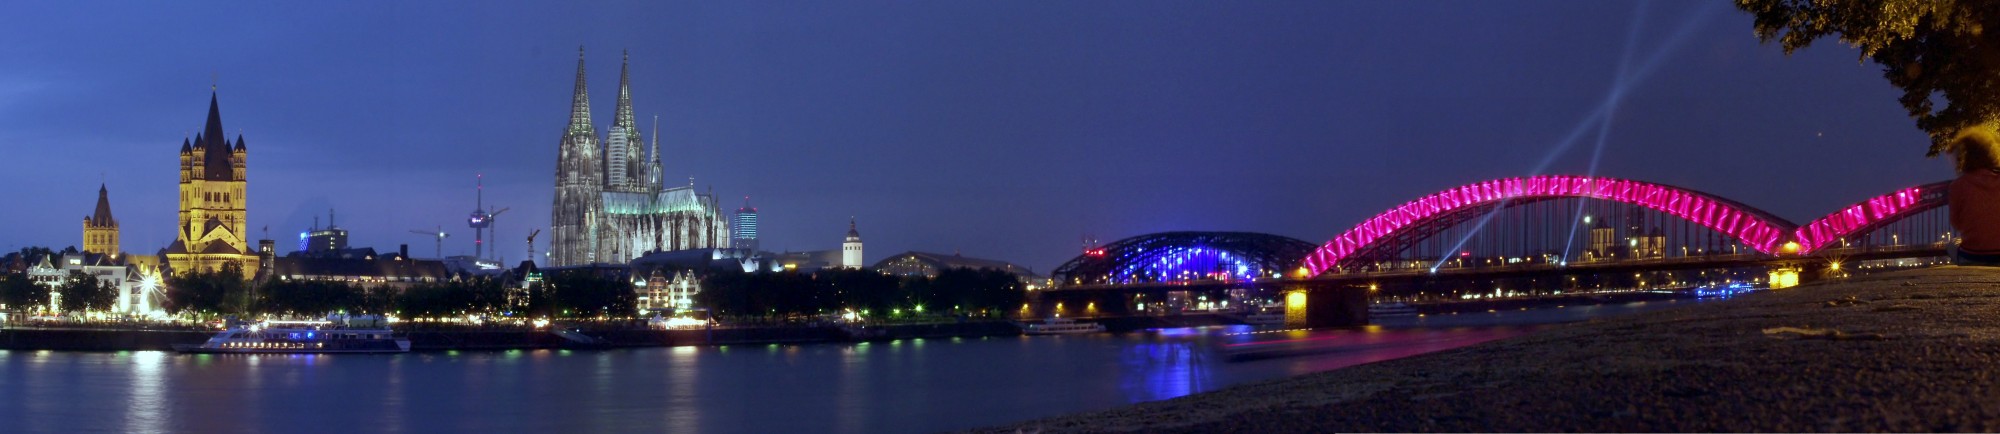 Köln - Rheinpanorama bei Nacht